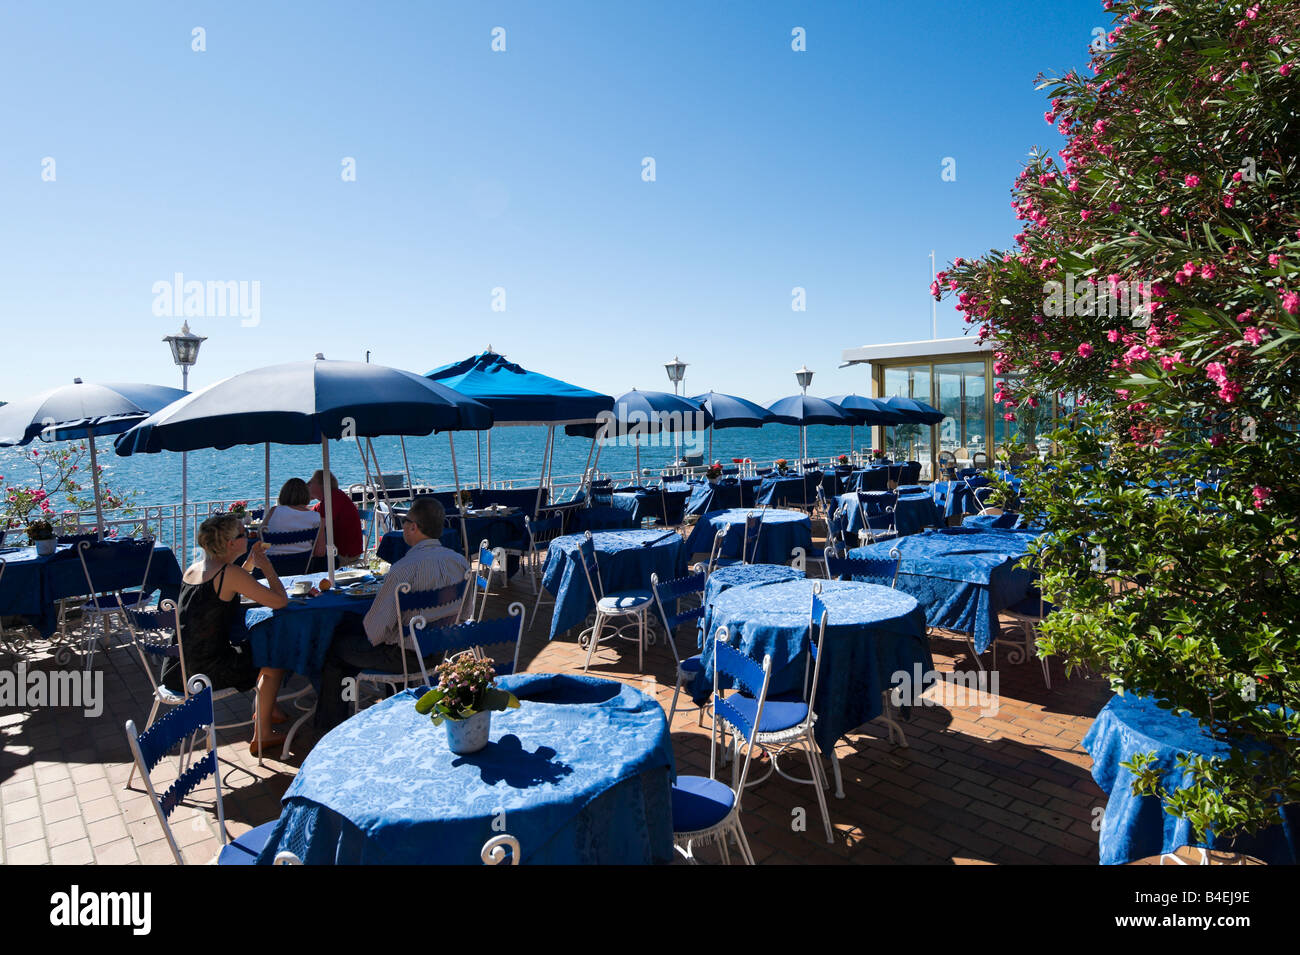 Restaurant Terrace of the Best Western Hotel Milano, Belgirate, Lake Maggiore, Italy Stock Photo